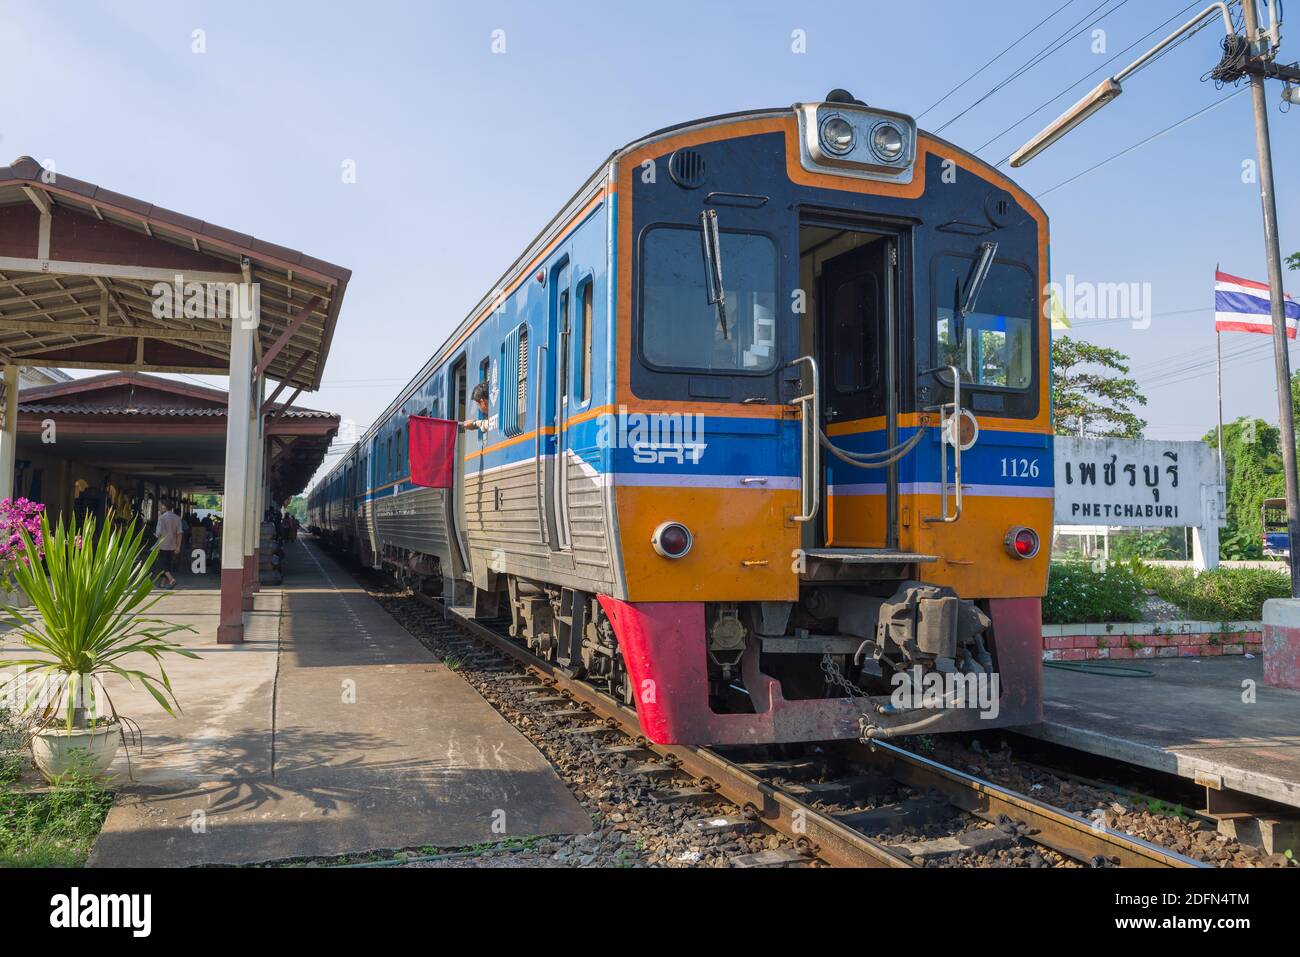 PHETCHABURI, THAILAND - DECEMBER 13, 2018: Passenger train at the platform of the Phetchaburi city station. Thai Railways Stock Photo